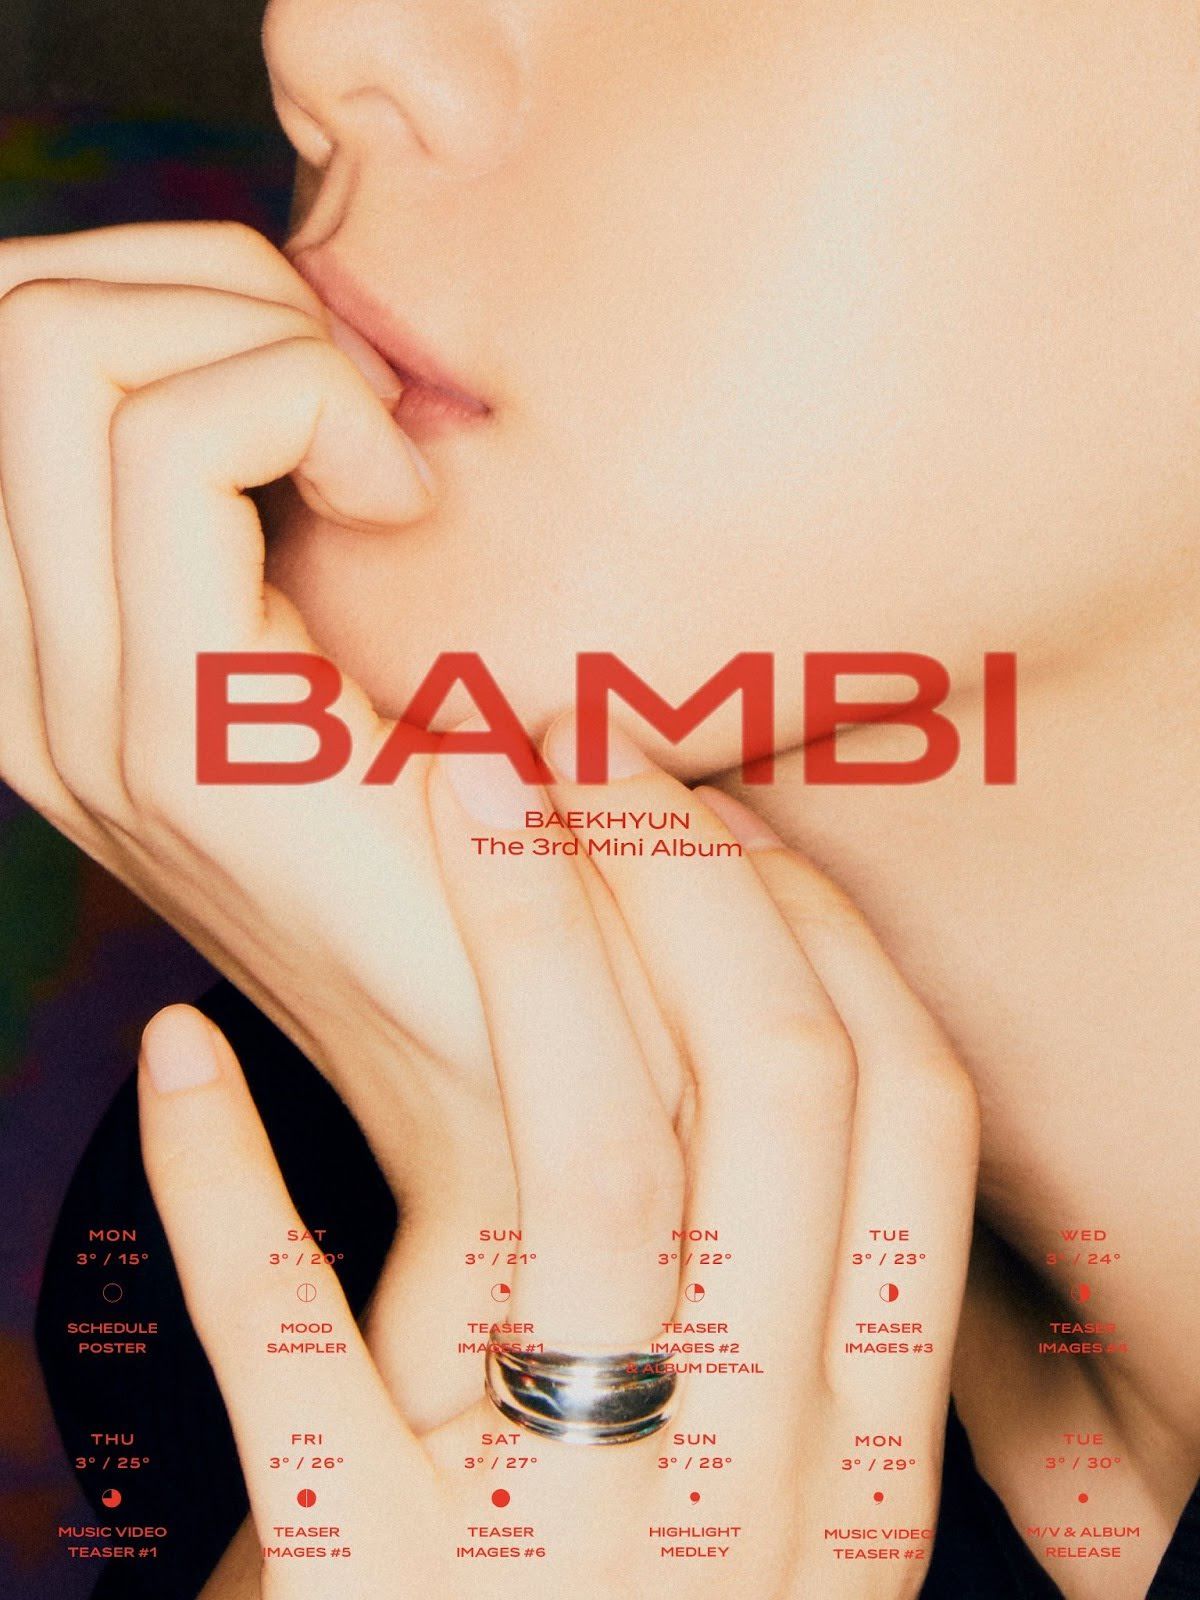  Bambi by Baekhyun